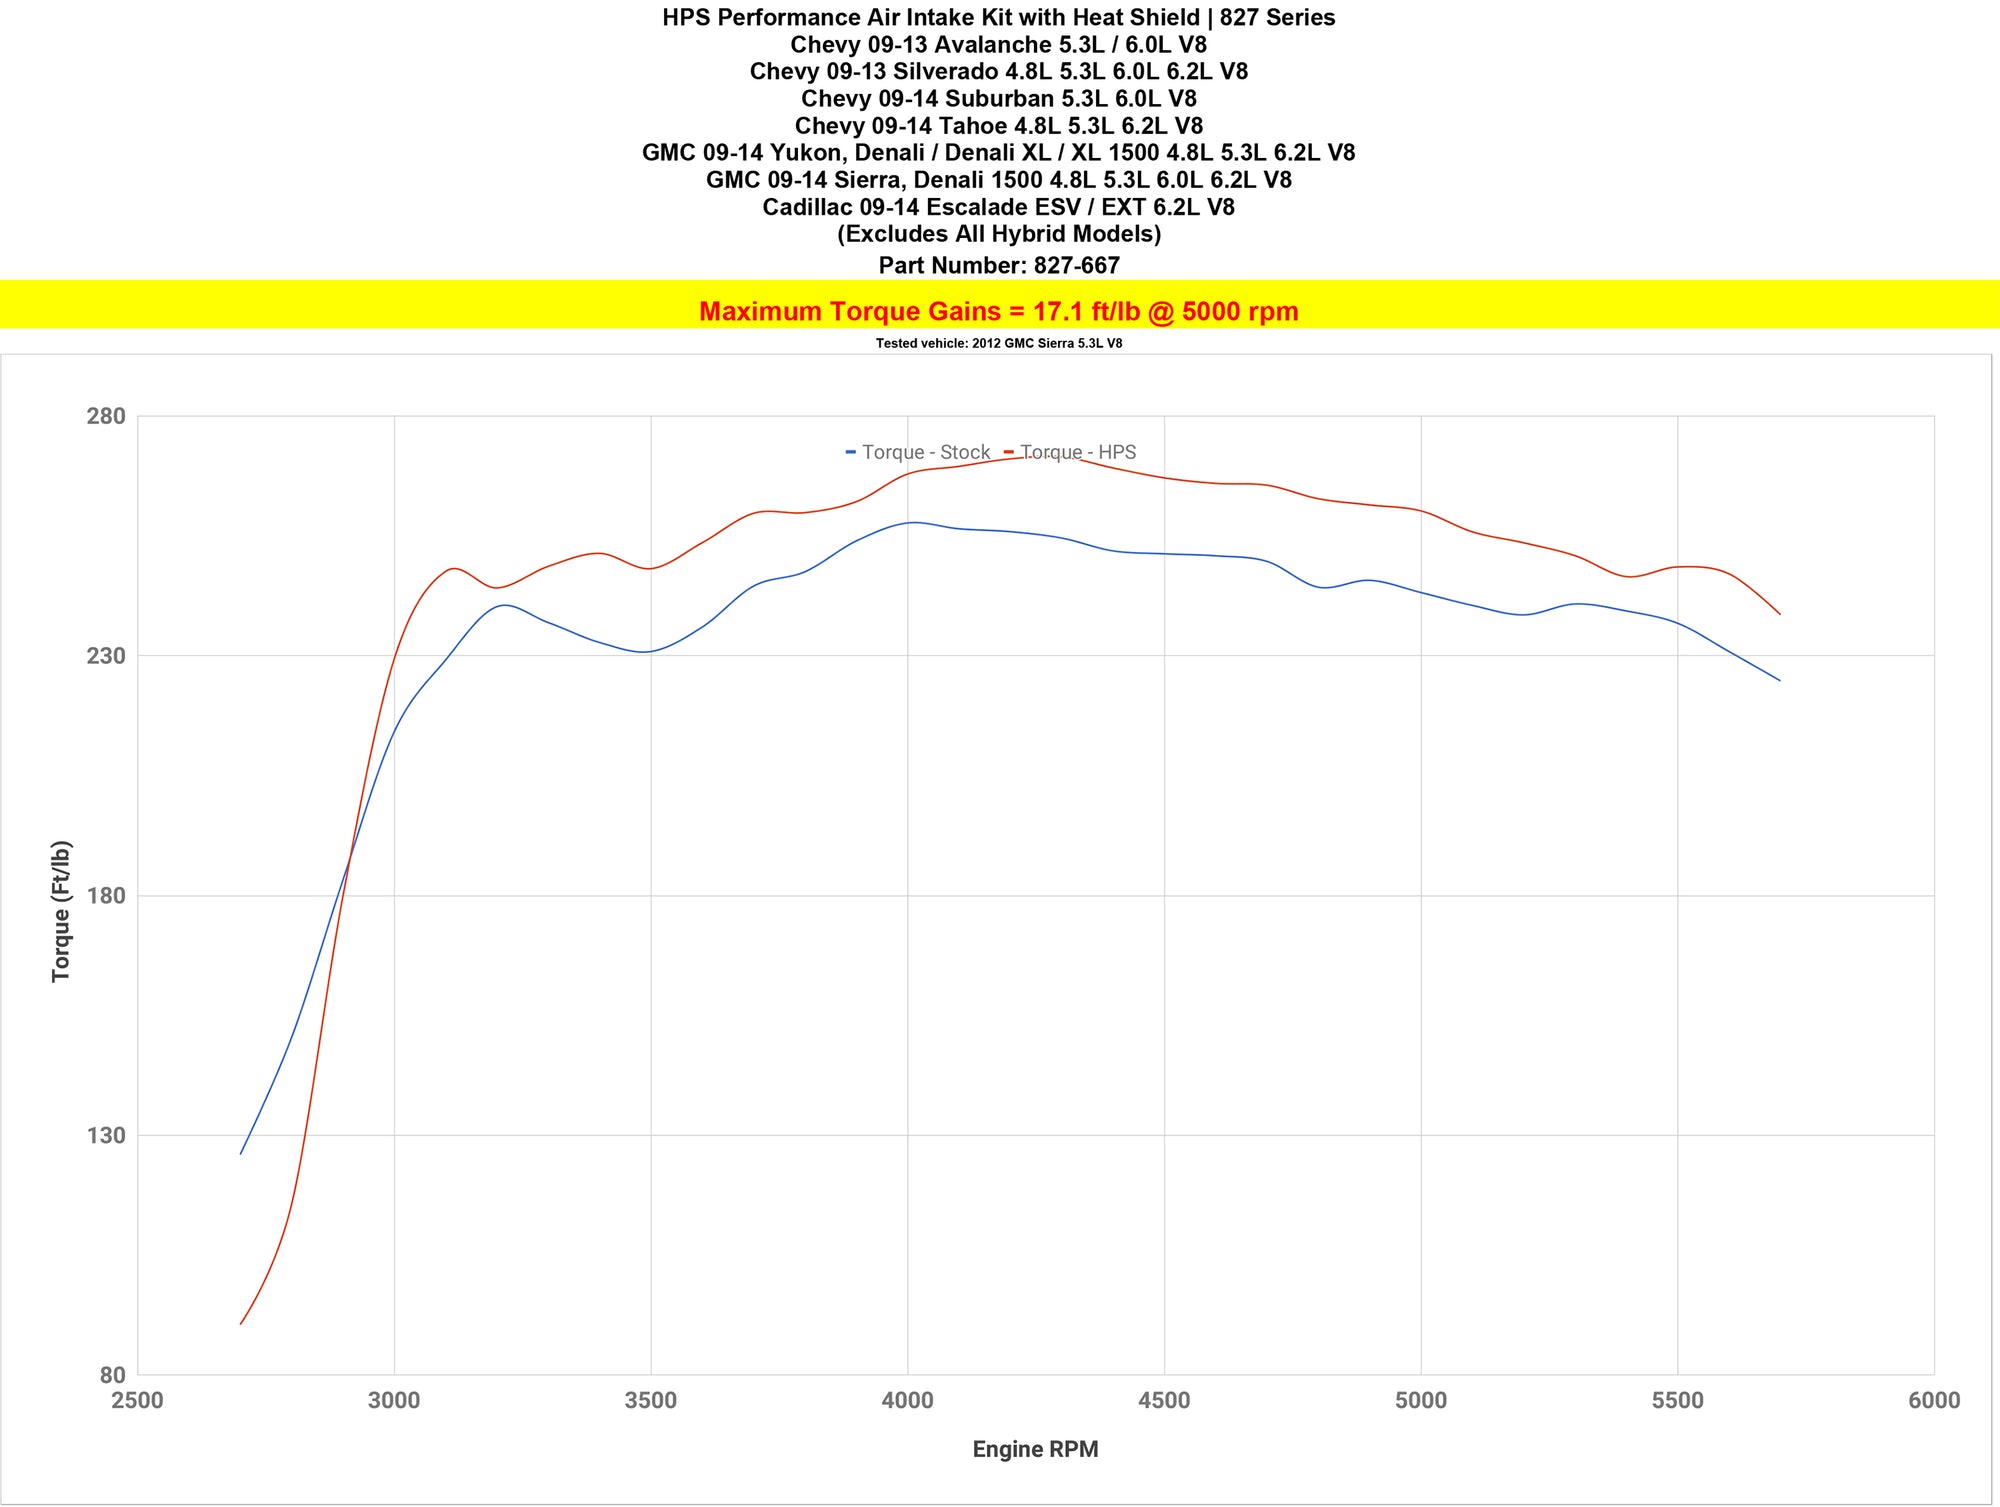 Dyno proven gains 17.1 ft/lb HPS Performance Shortram Air Intake Kit 2009-2014 Chevy Suburban 5.3L V8 827-667BL